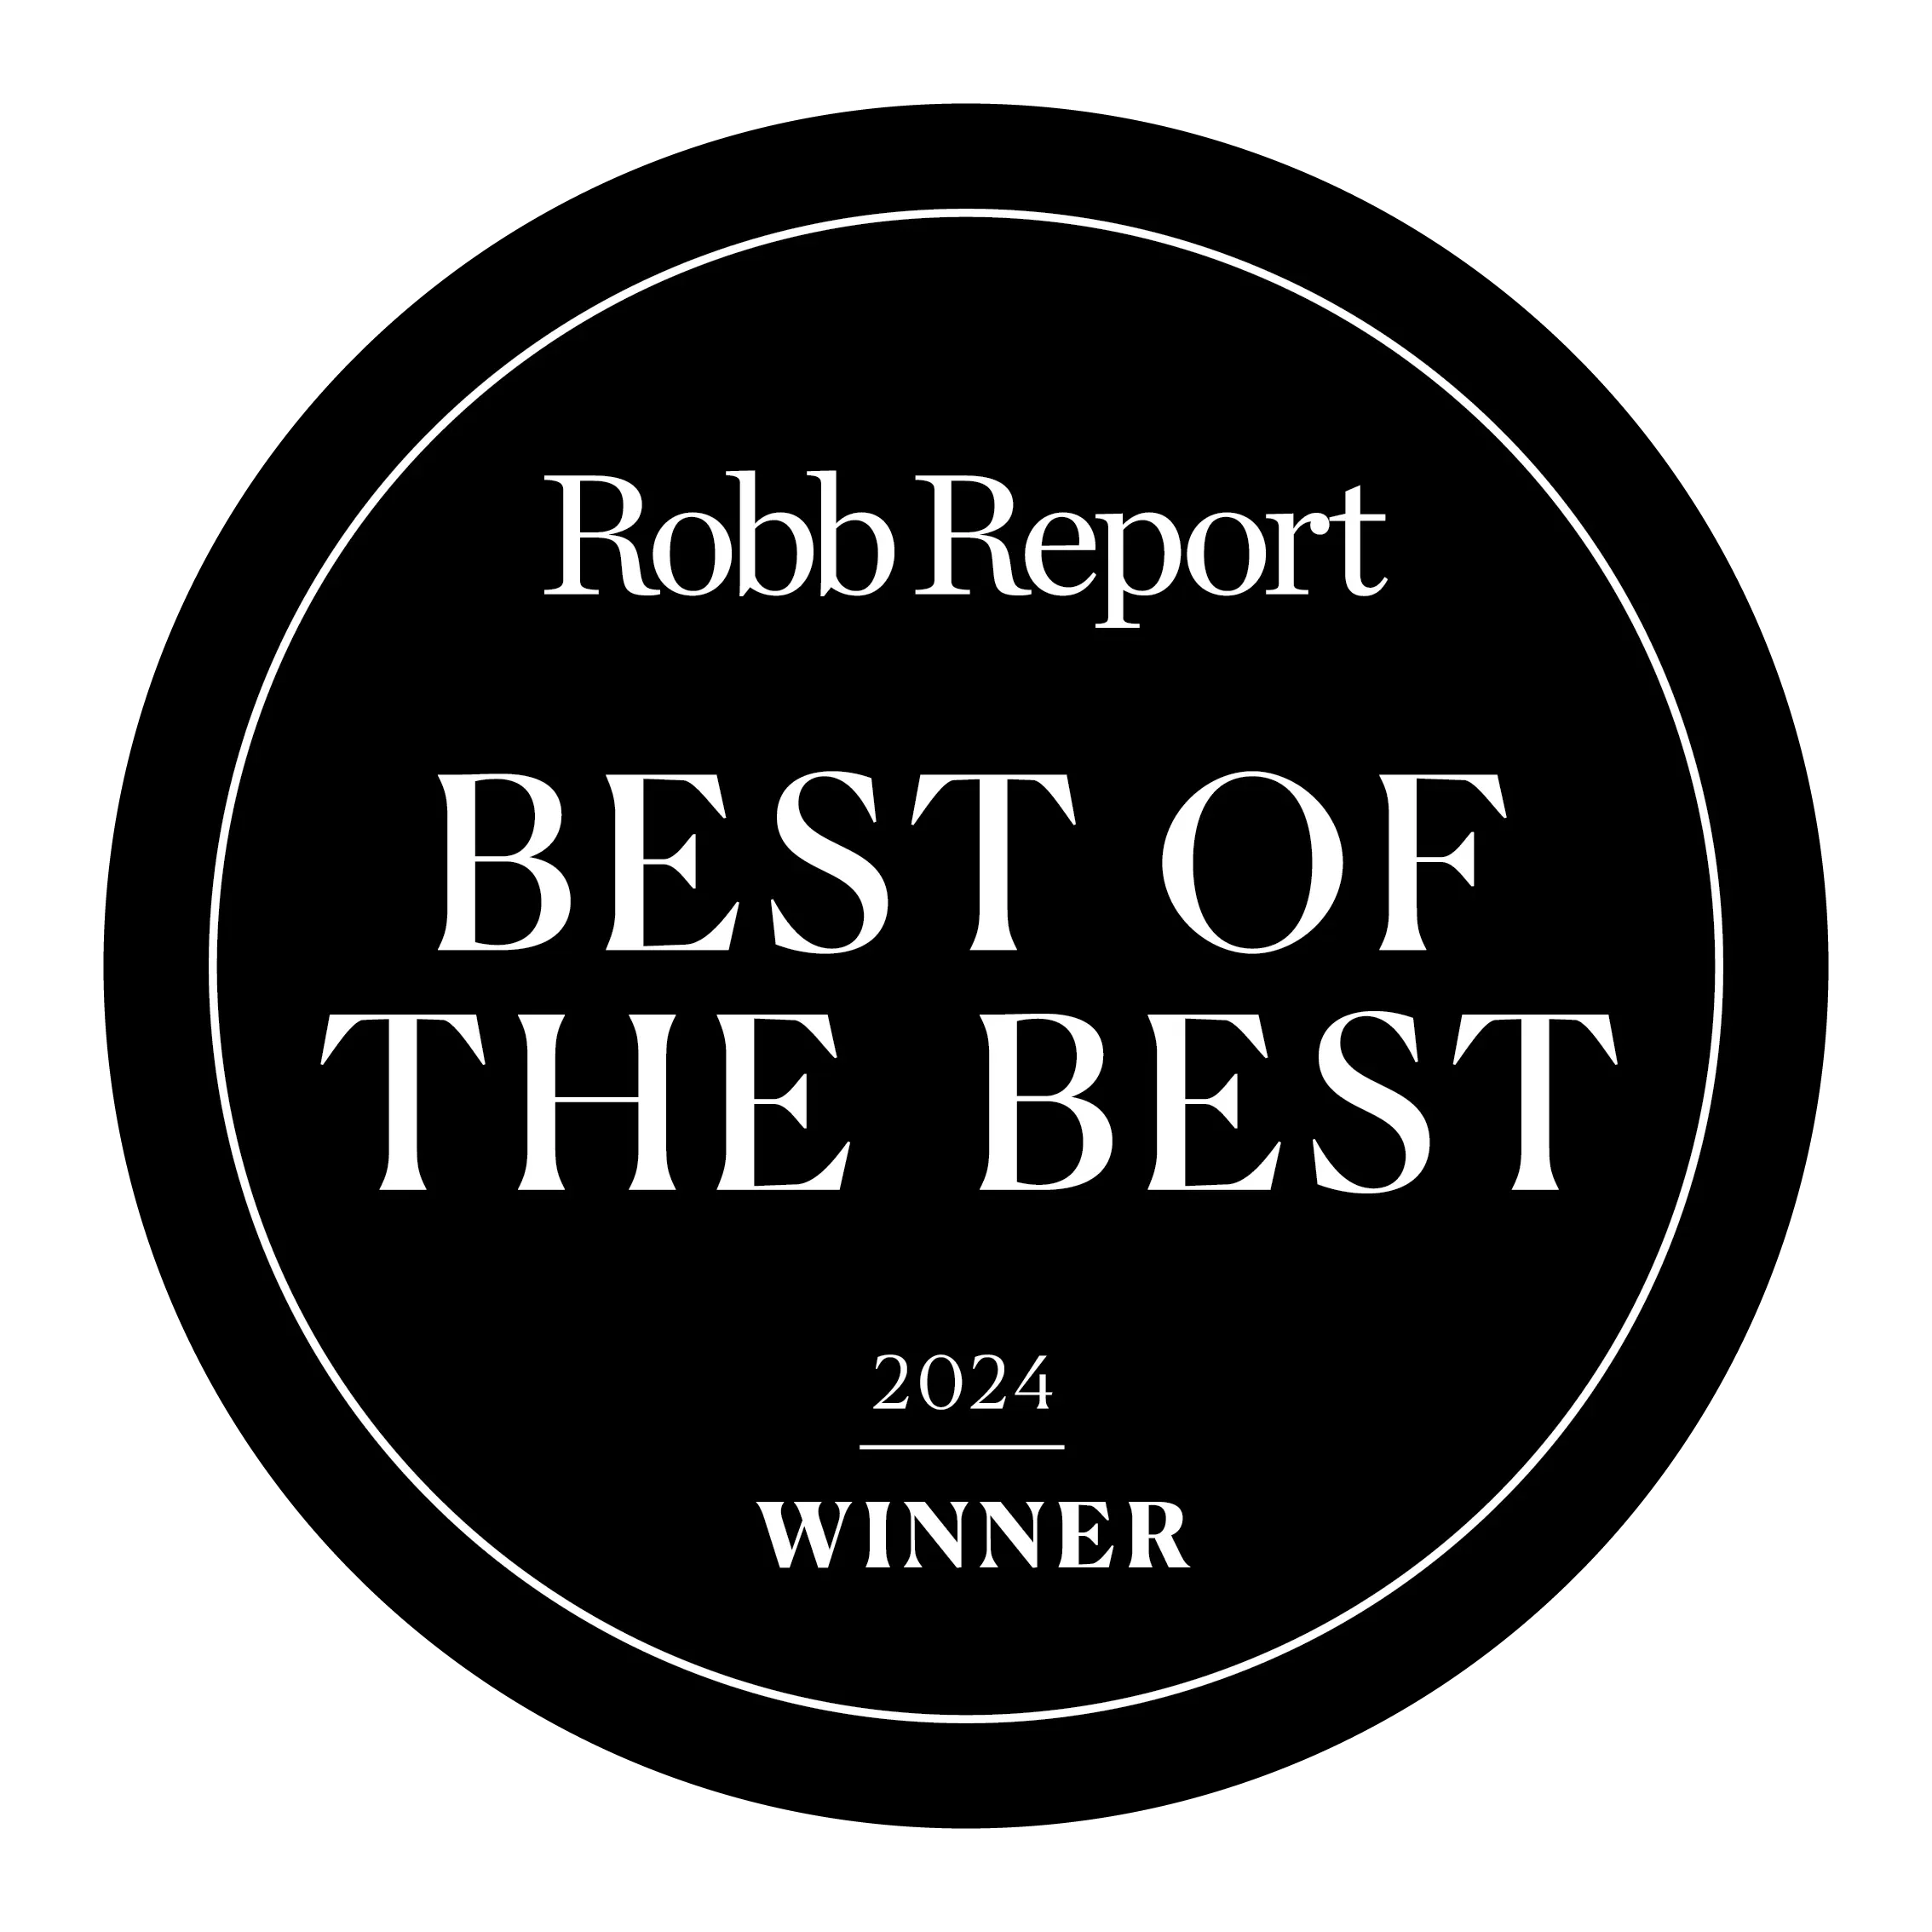 Cirrus SR Series G7 Wins 2024 Robb Report Best of the Best Award 